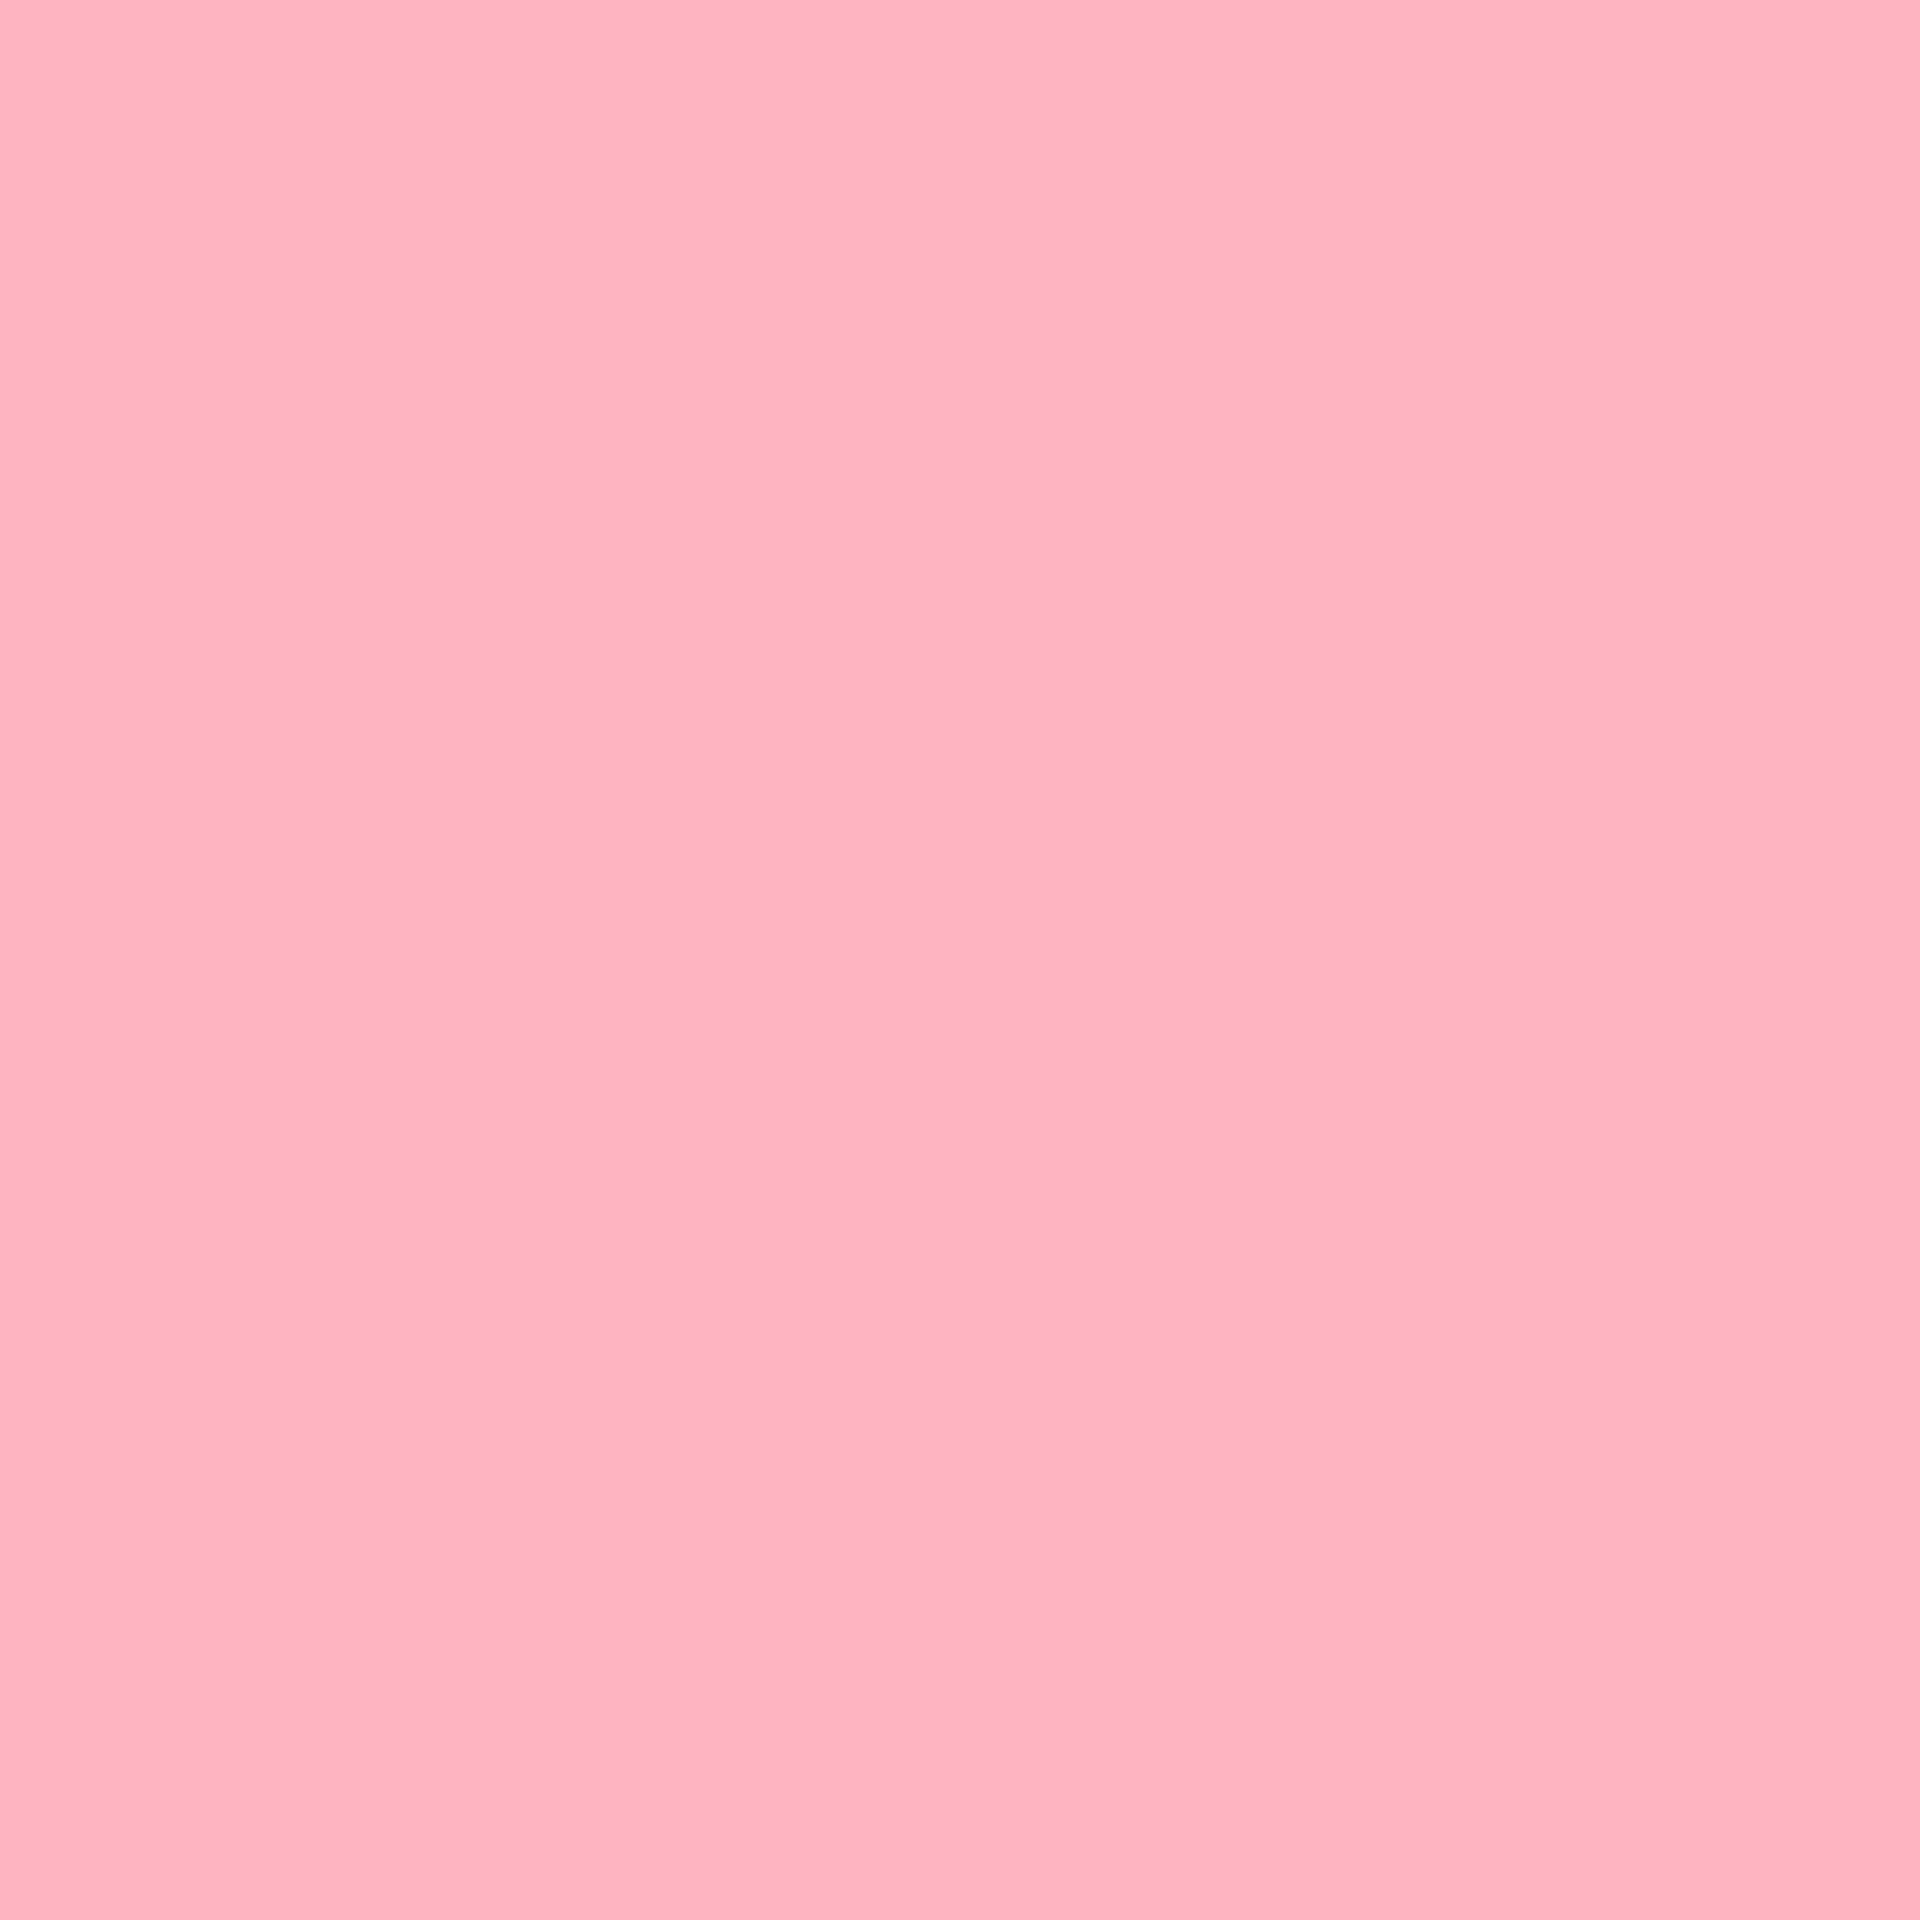 100+] Plain Pink Background s 